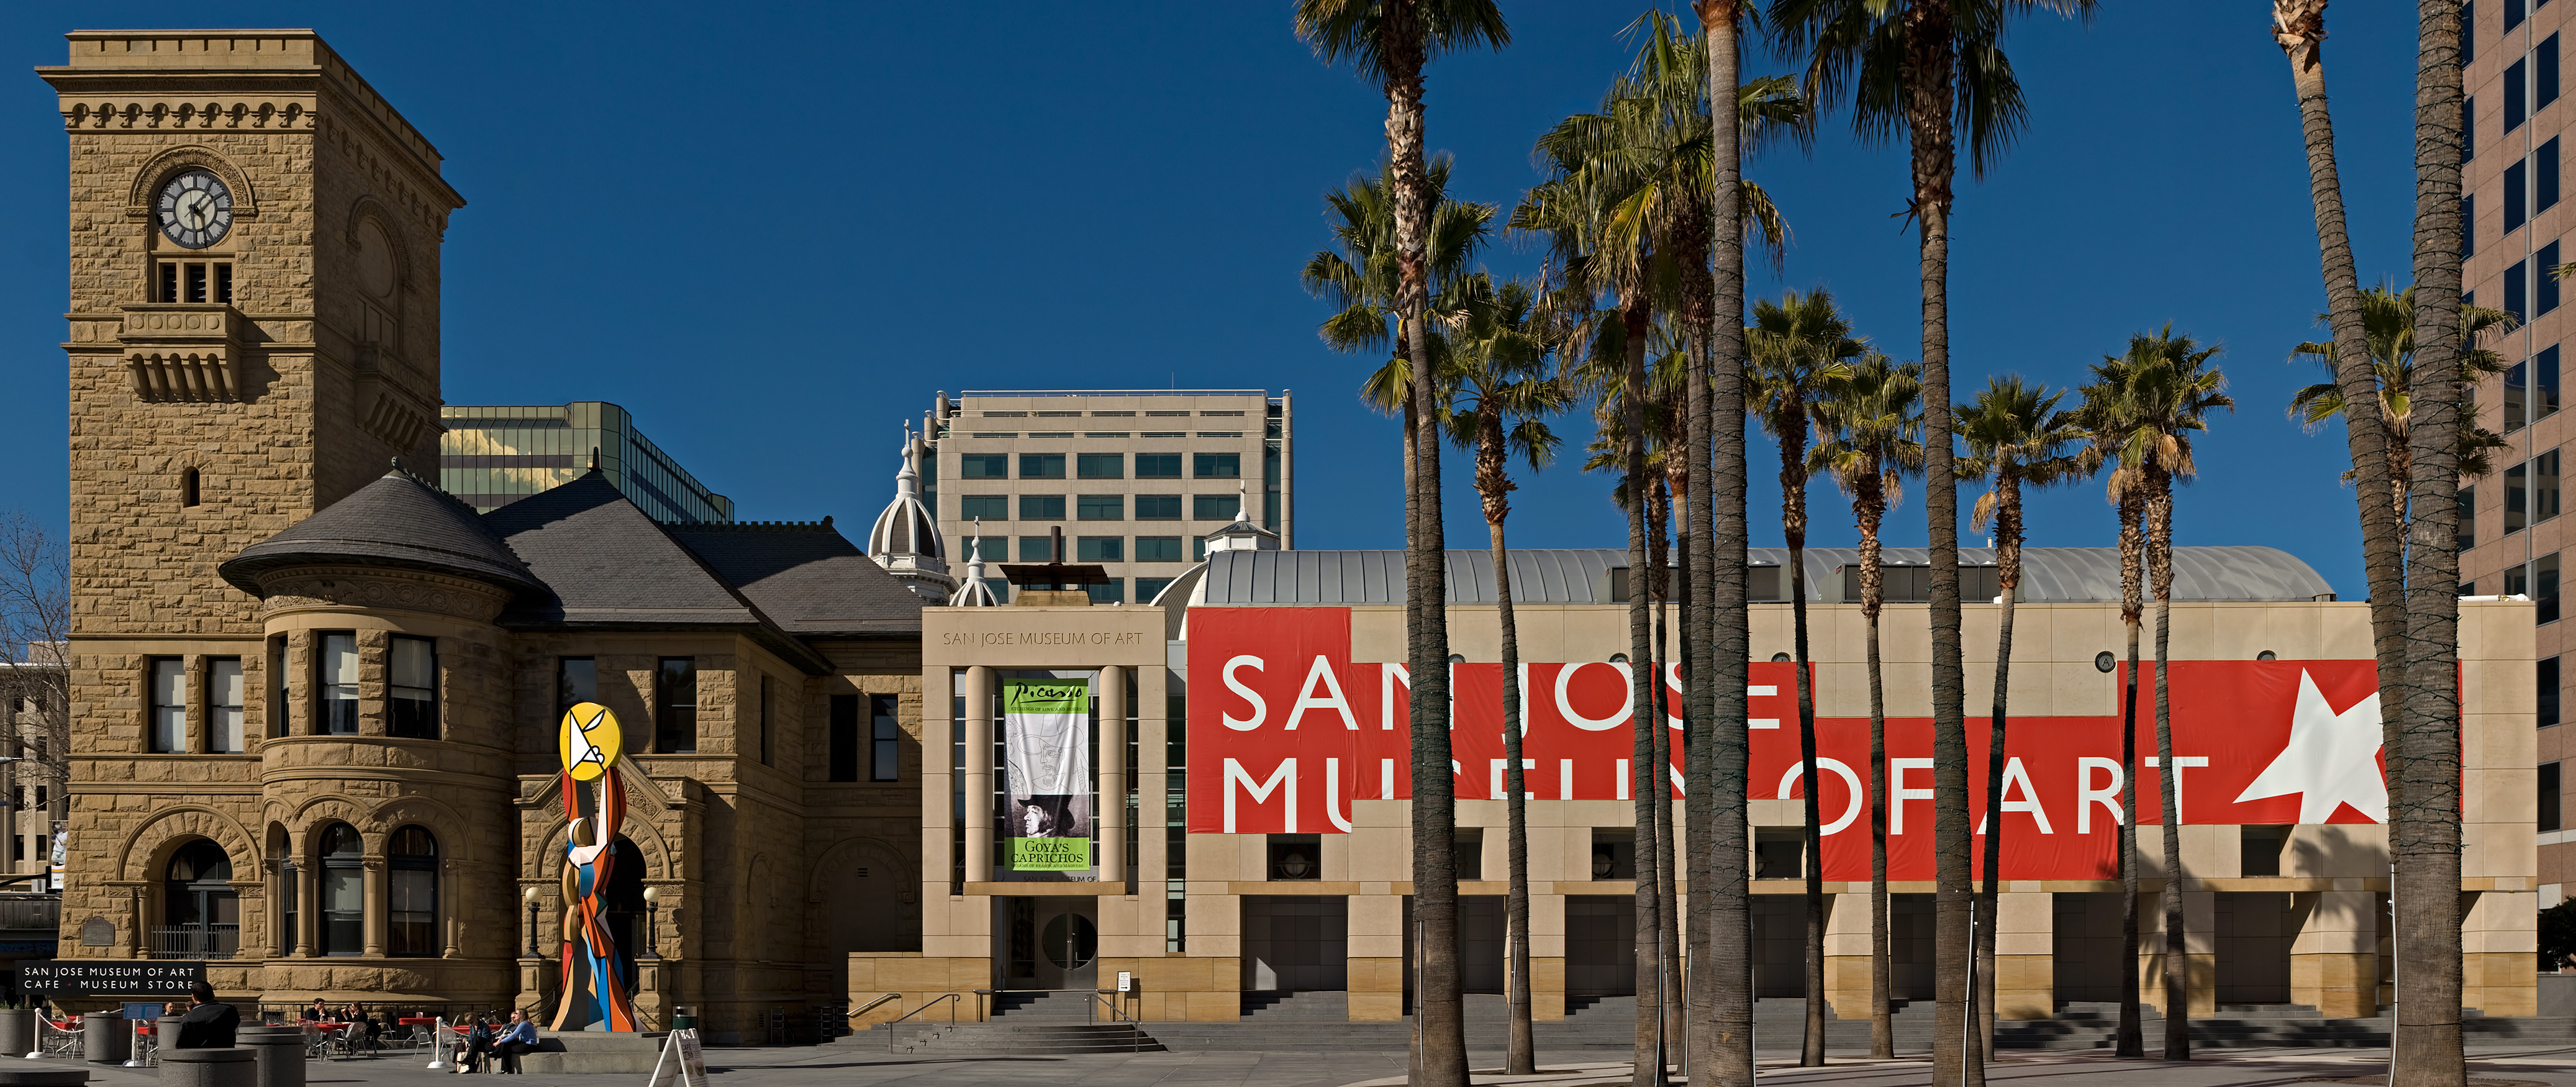 San Jose Museum of Art